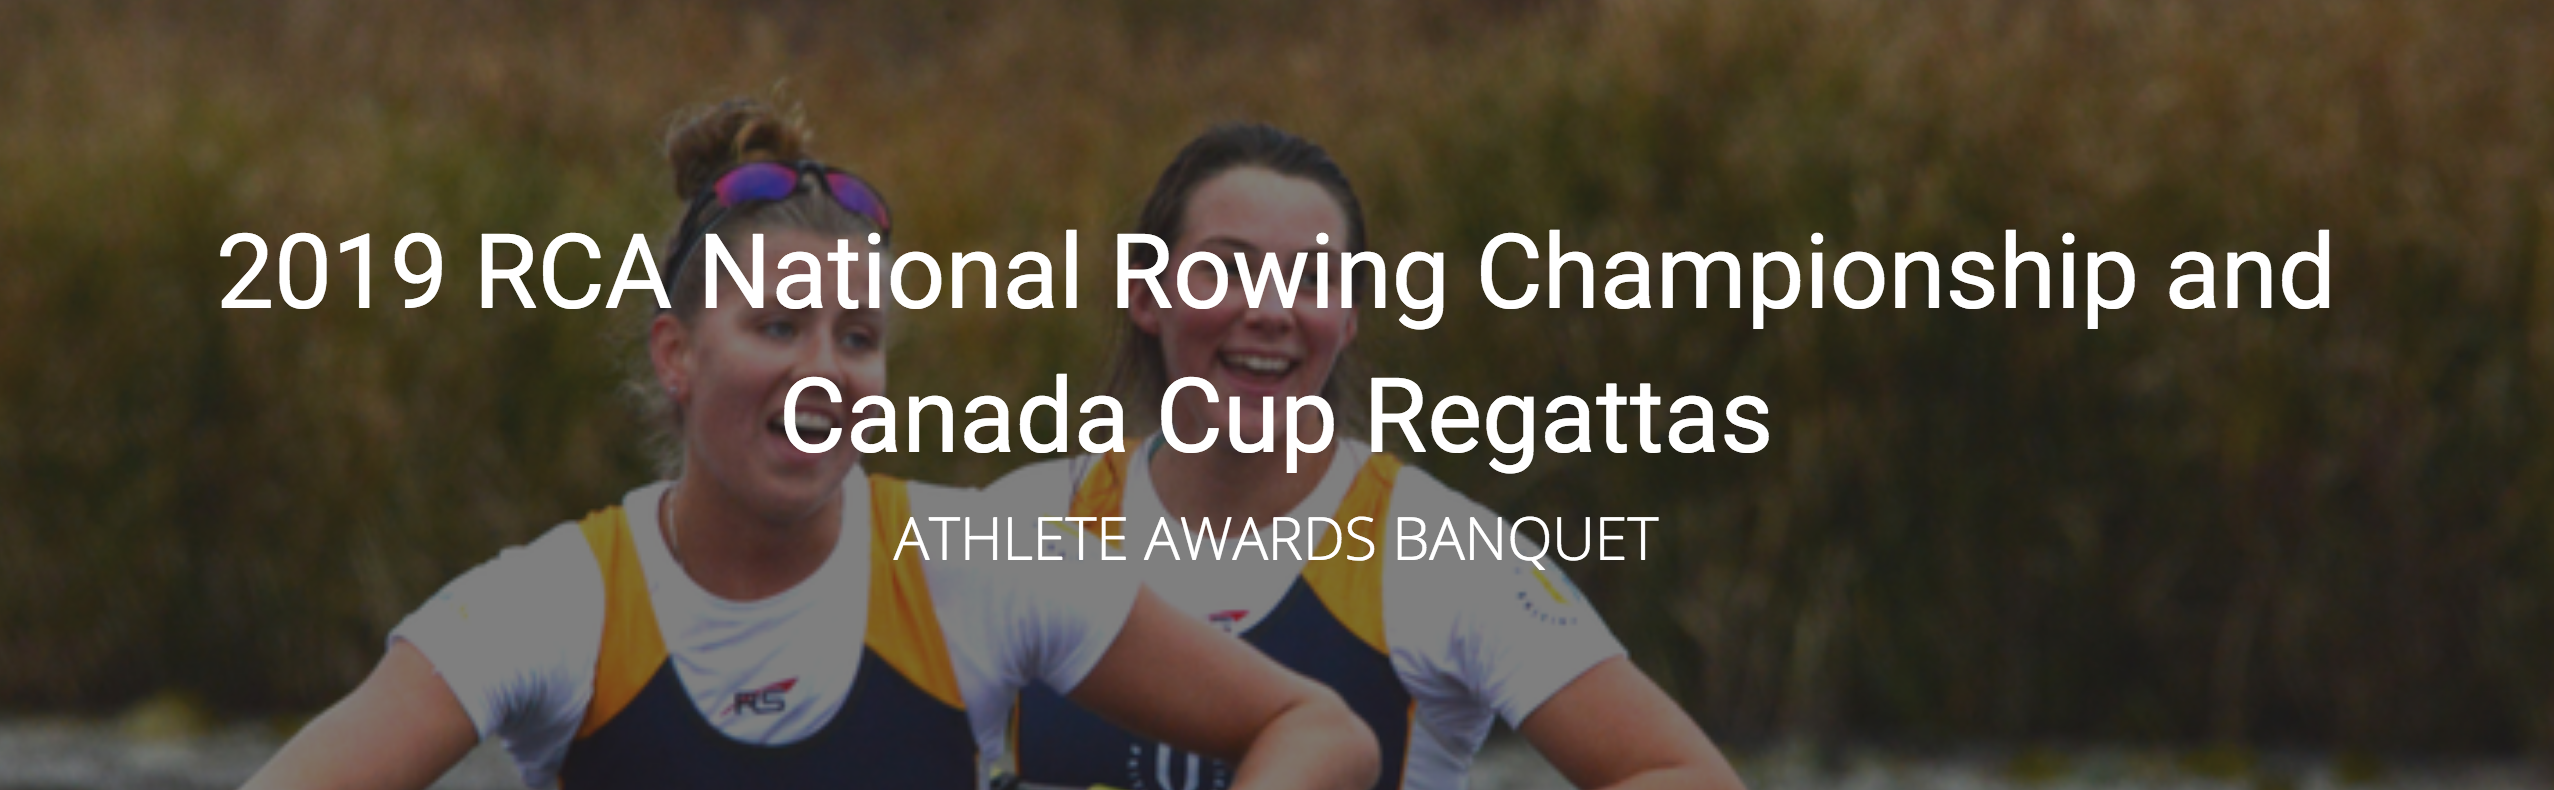 2019 RCA National Rowing Championship Regatta Athlete Awards Banquet